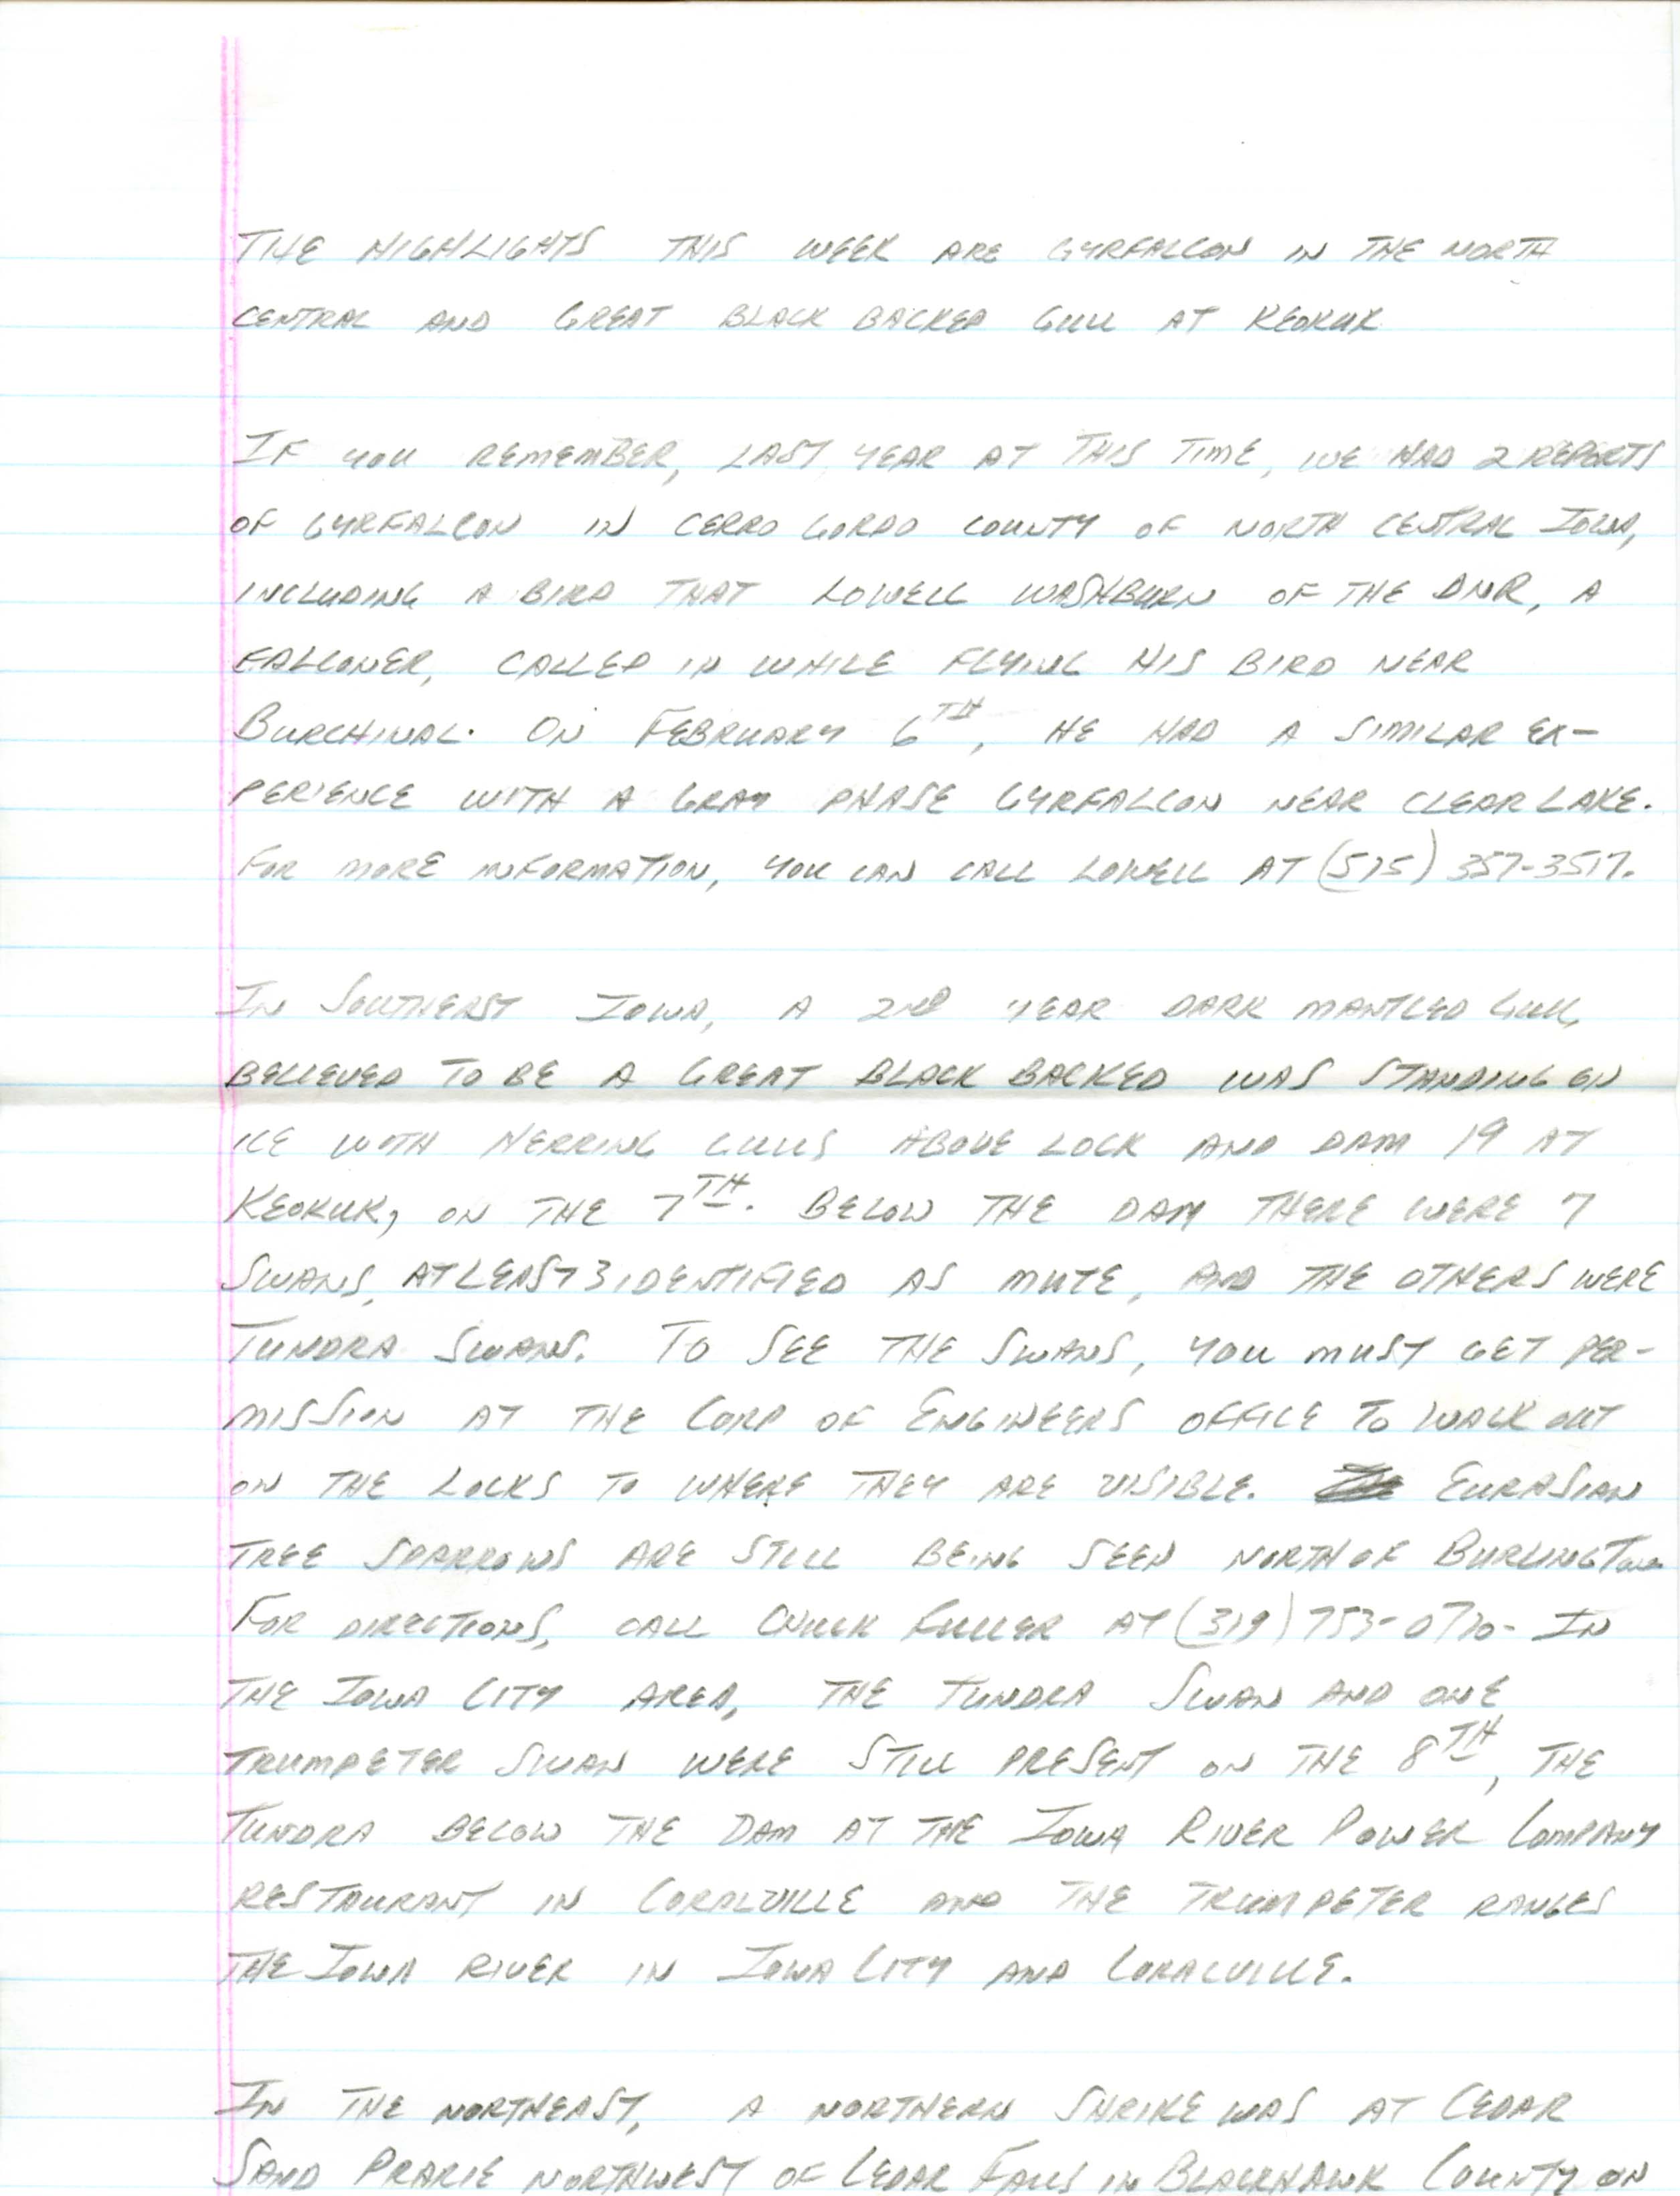 Iowa Birdline update, February 11, 1991 notes